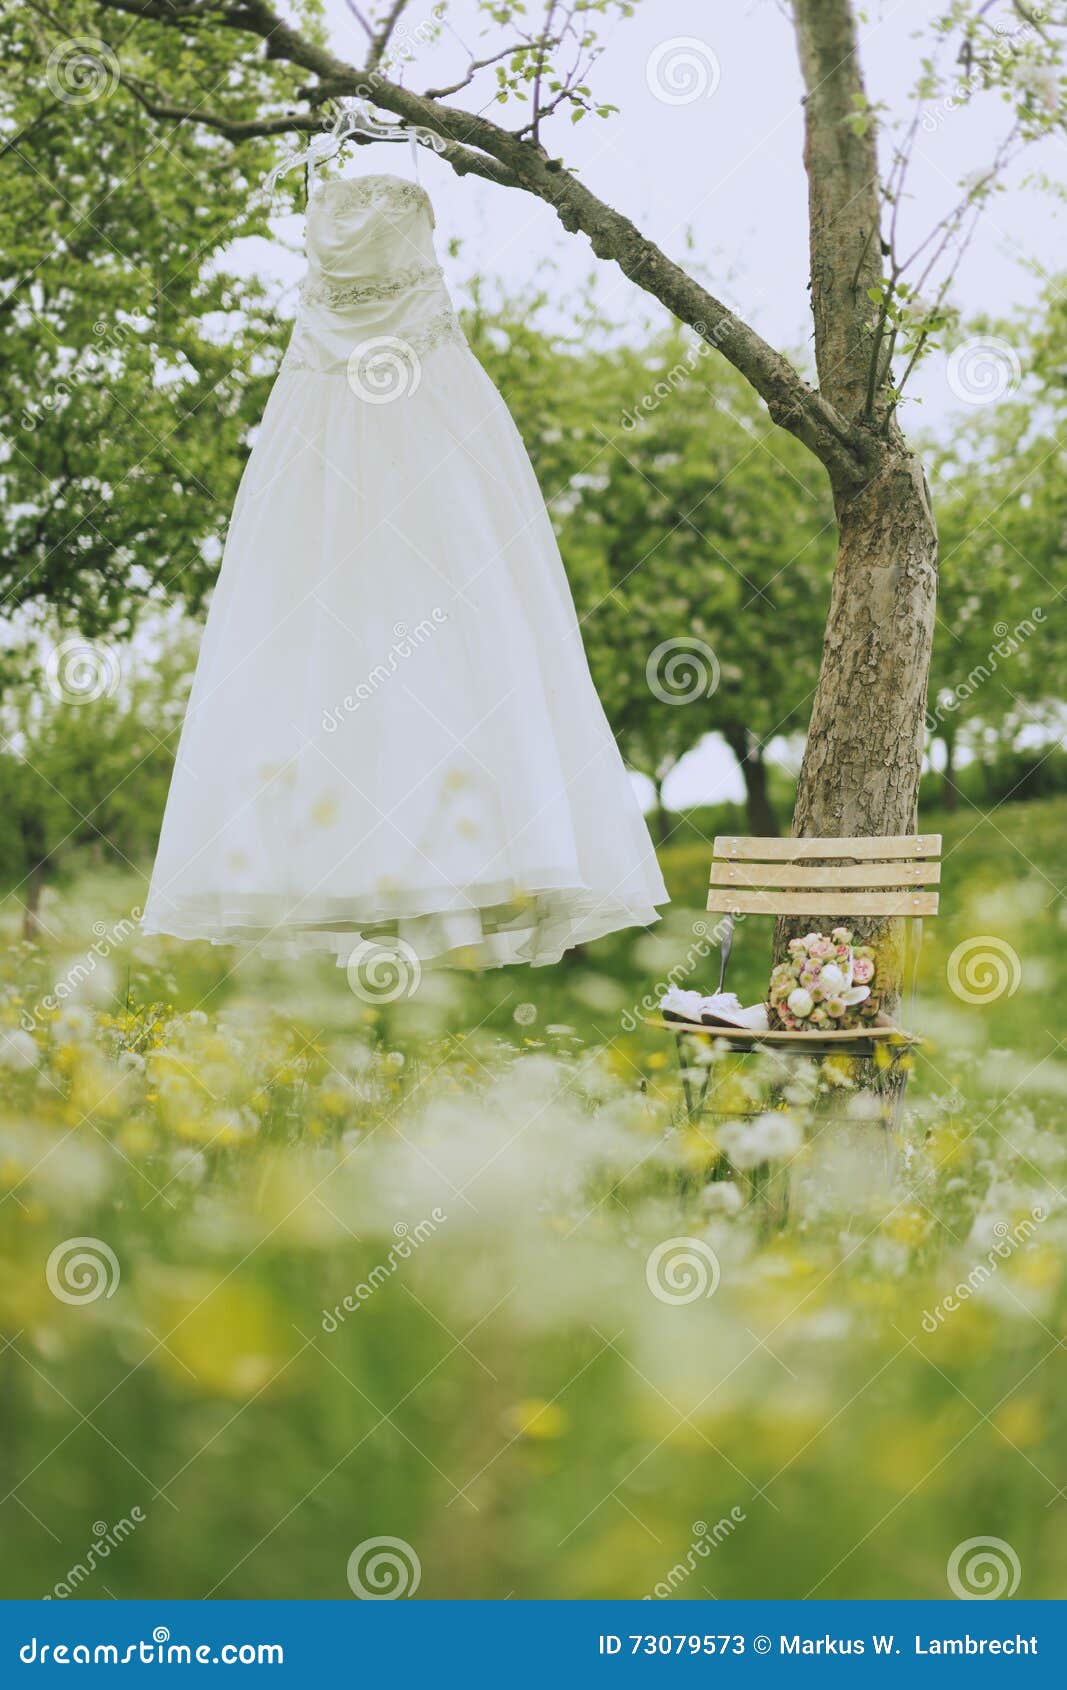 Garden Wedding Bridal Dress Stock Image Image Of Decor Flowers